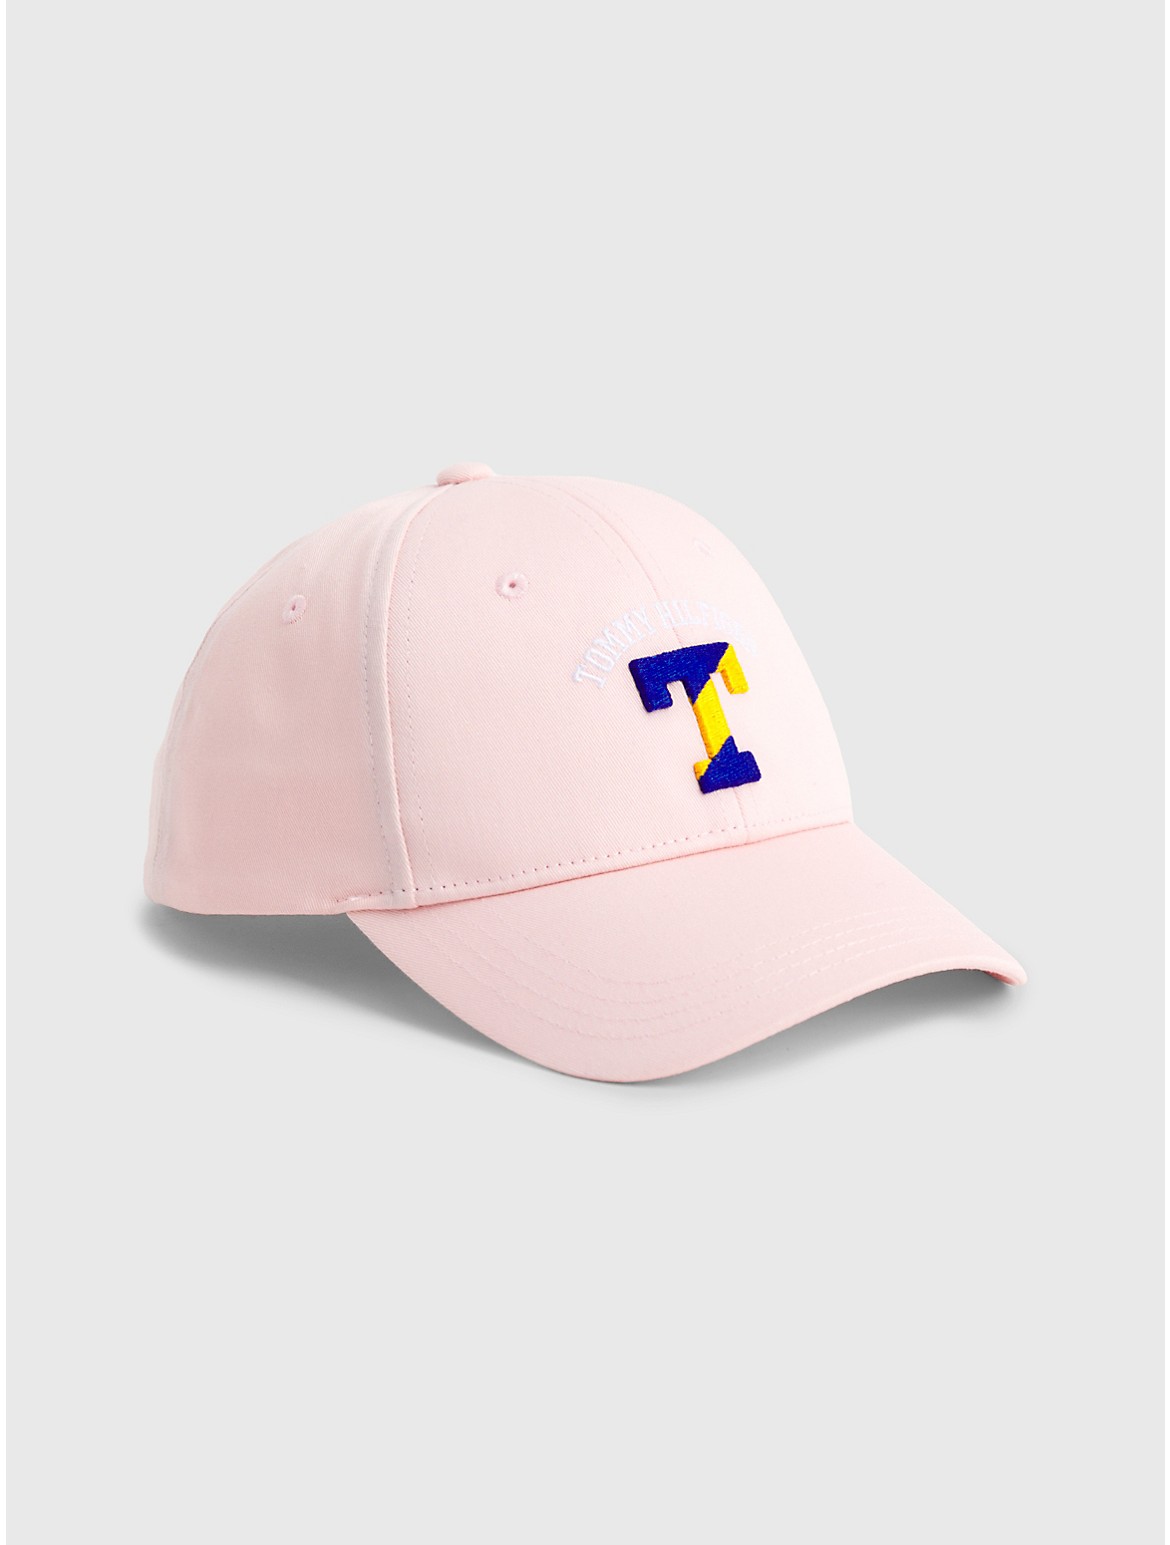 Tommy Hilfiger Kids' Varsity Cap - Pink - L-XL